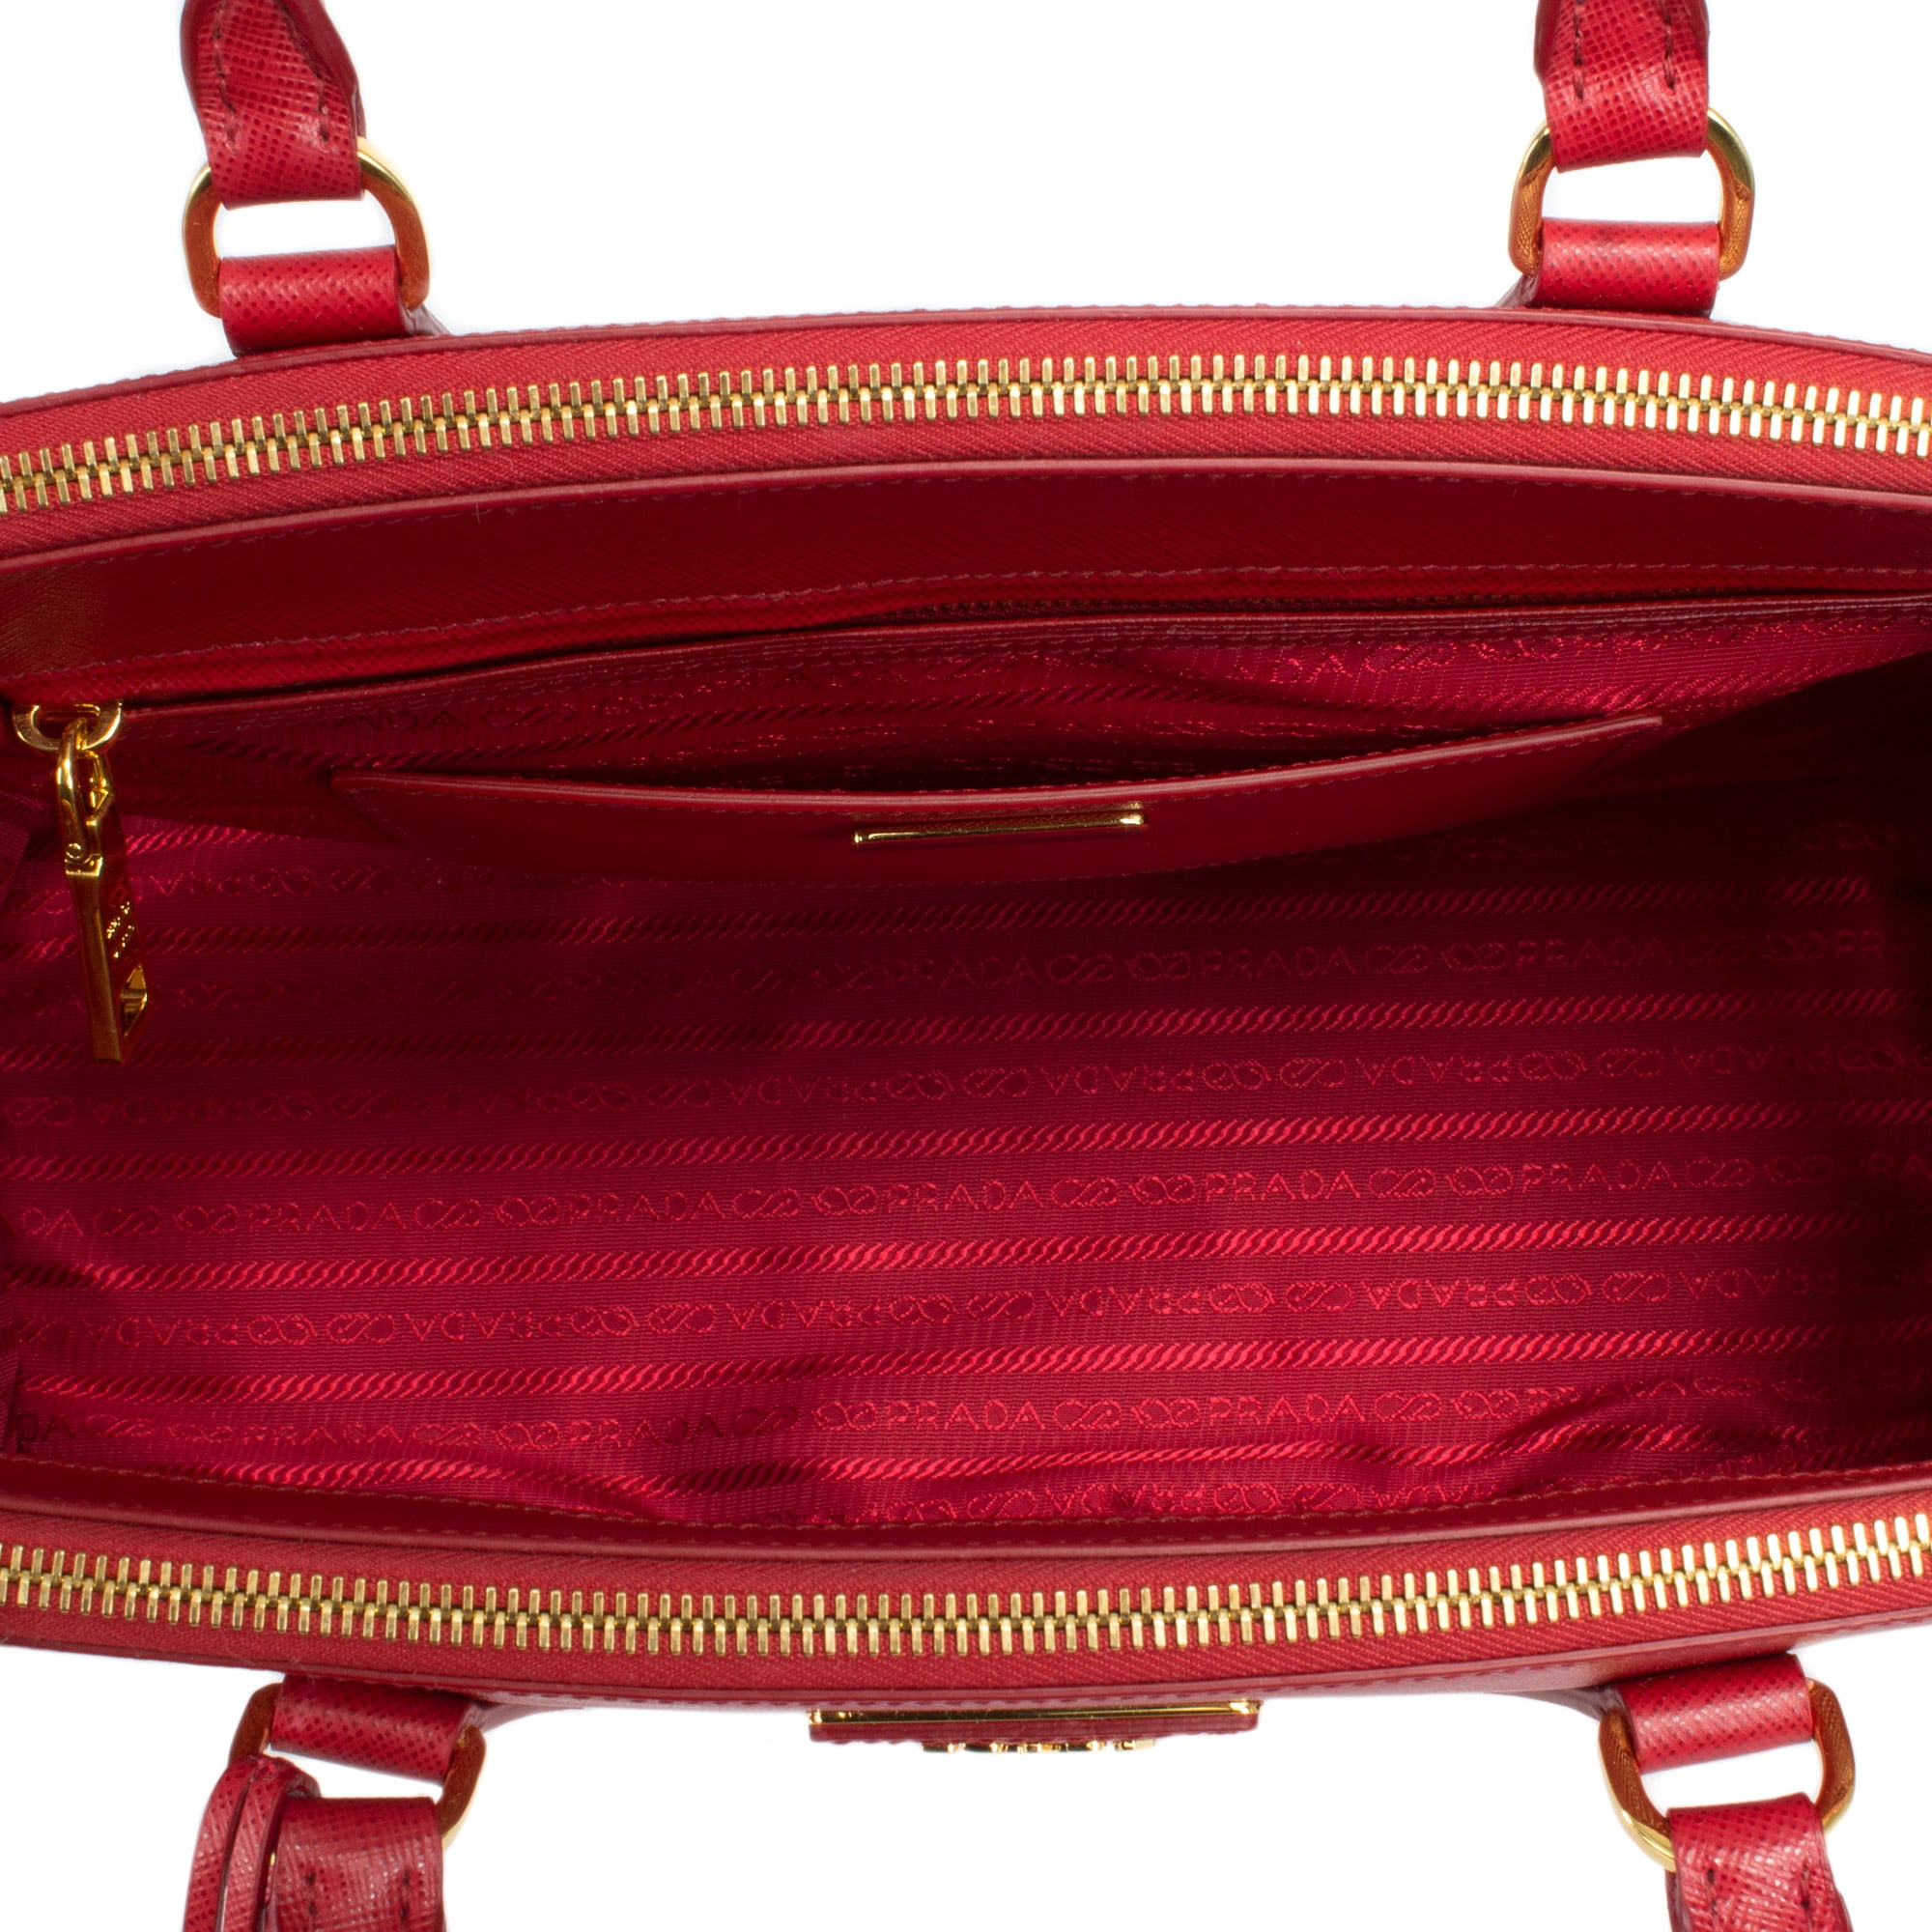 ❗️SOLD ❗️Prada galleria saffiano pink bag